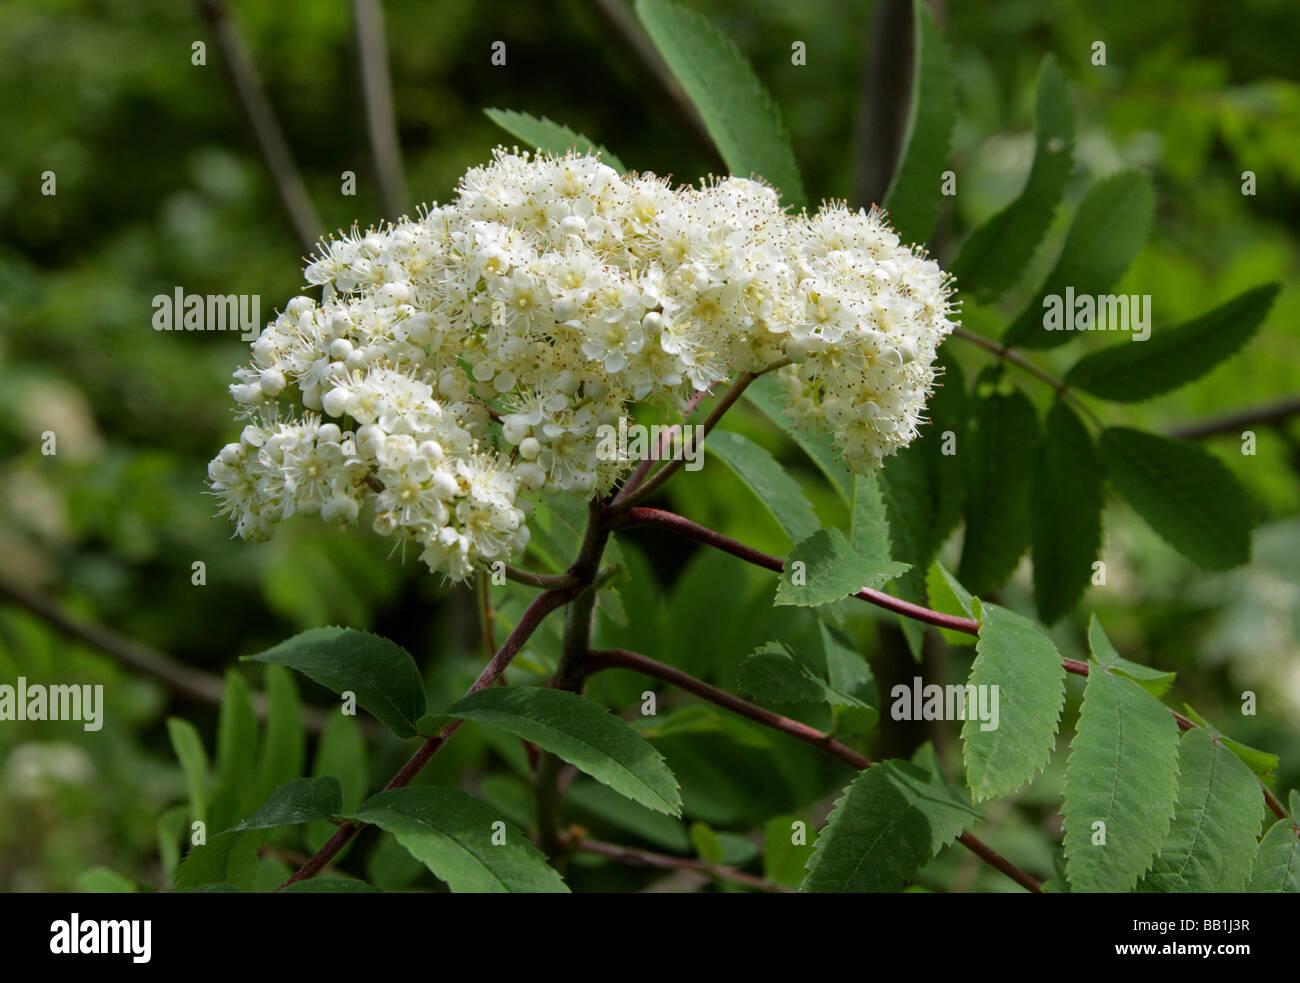 Rowan Tree or Mountain Ash Flowers, Sorbus aucuparia, Rosaceae Stock Photo